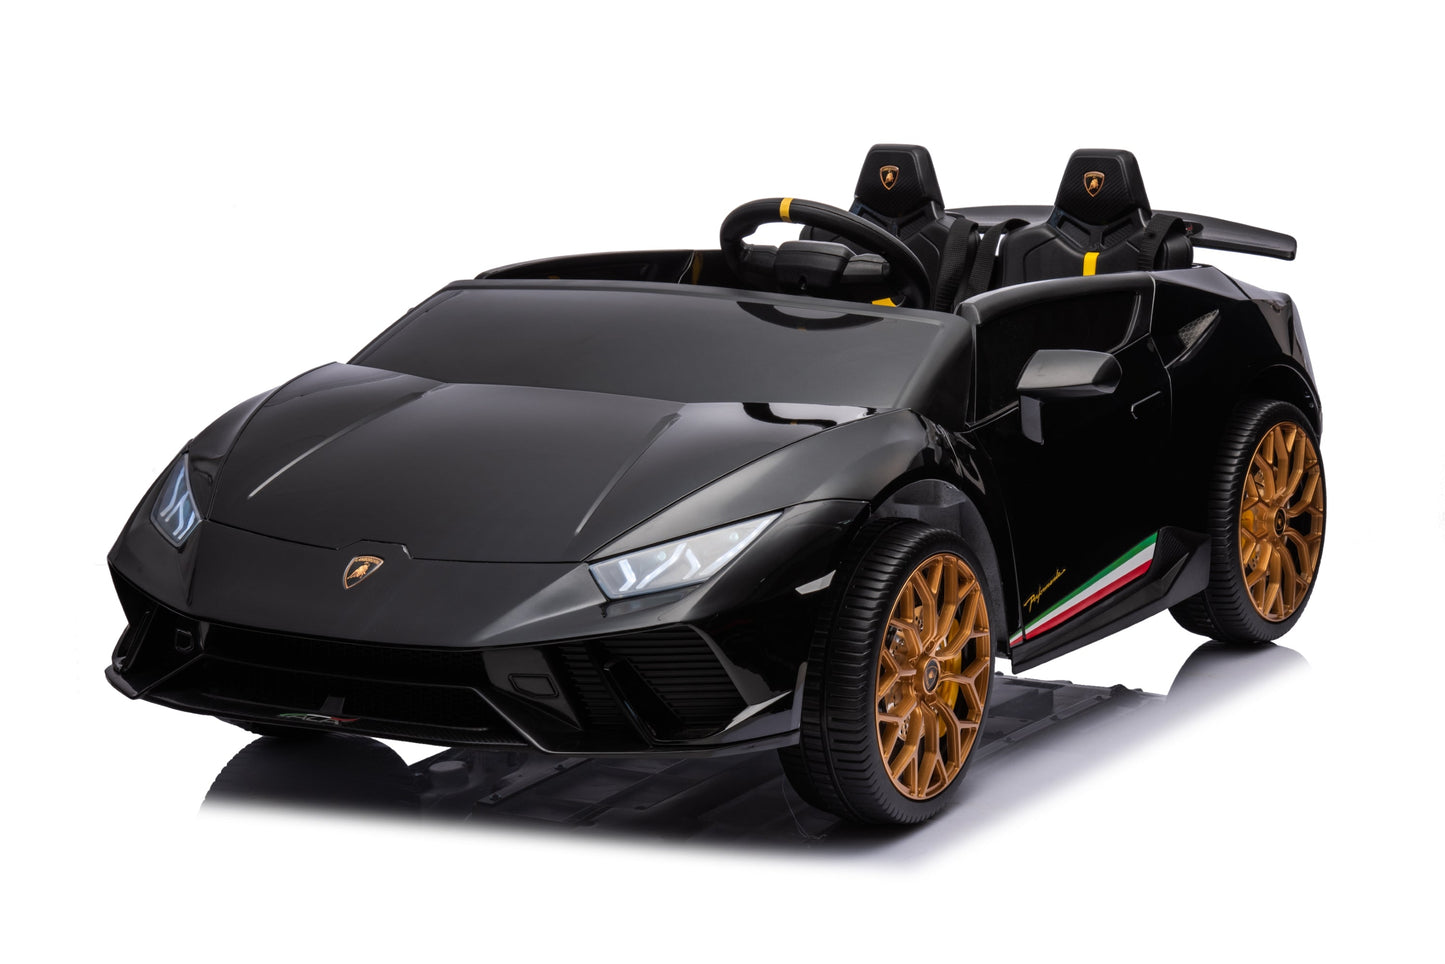 Freddo Toys Lamborghini Huracan